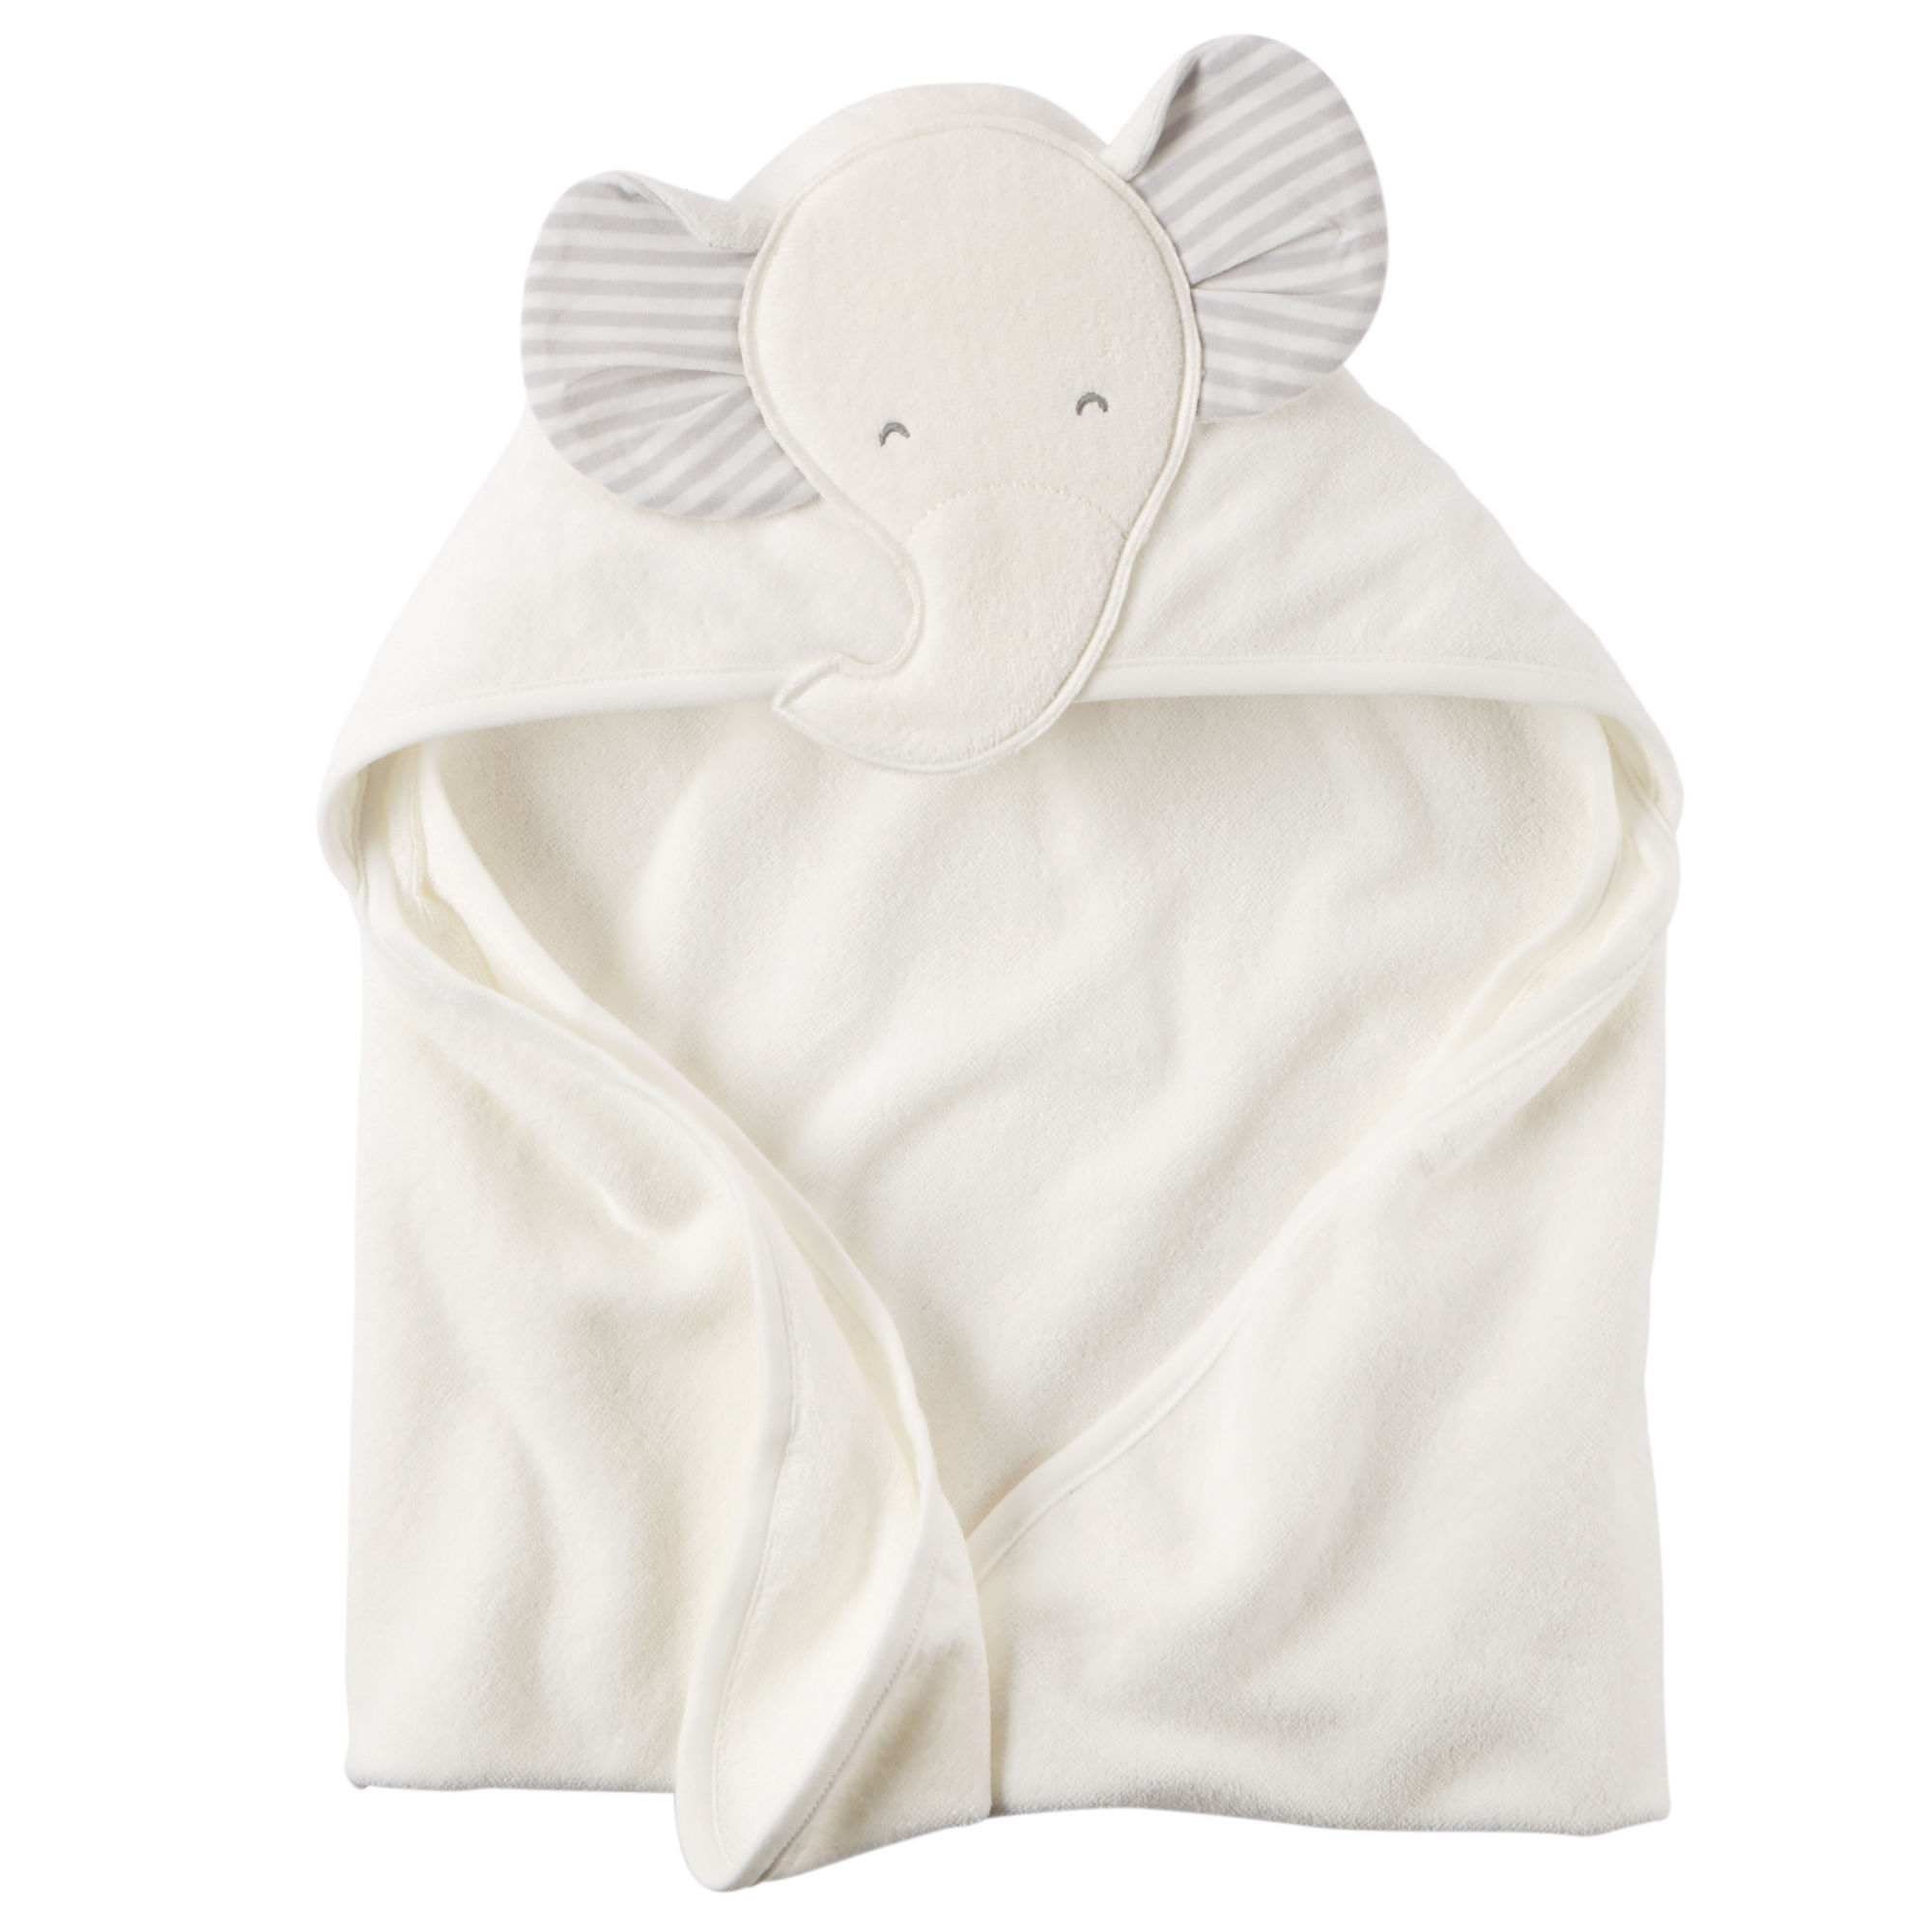 Carter's Baby Elephant Hooded Towel 